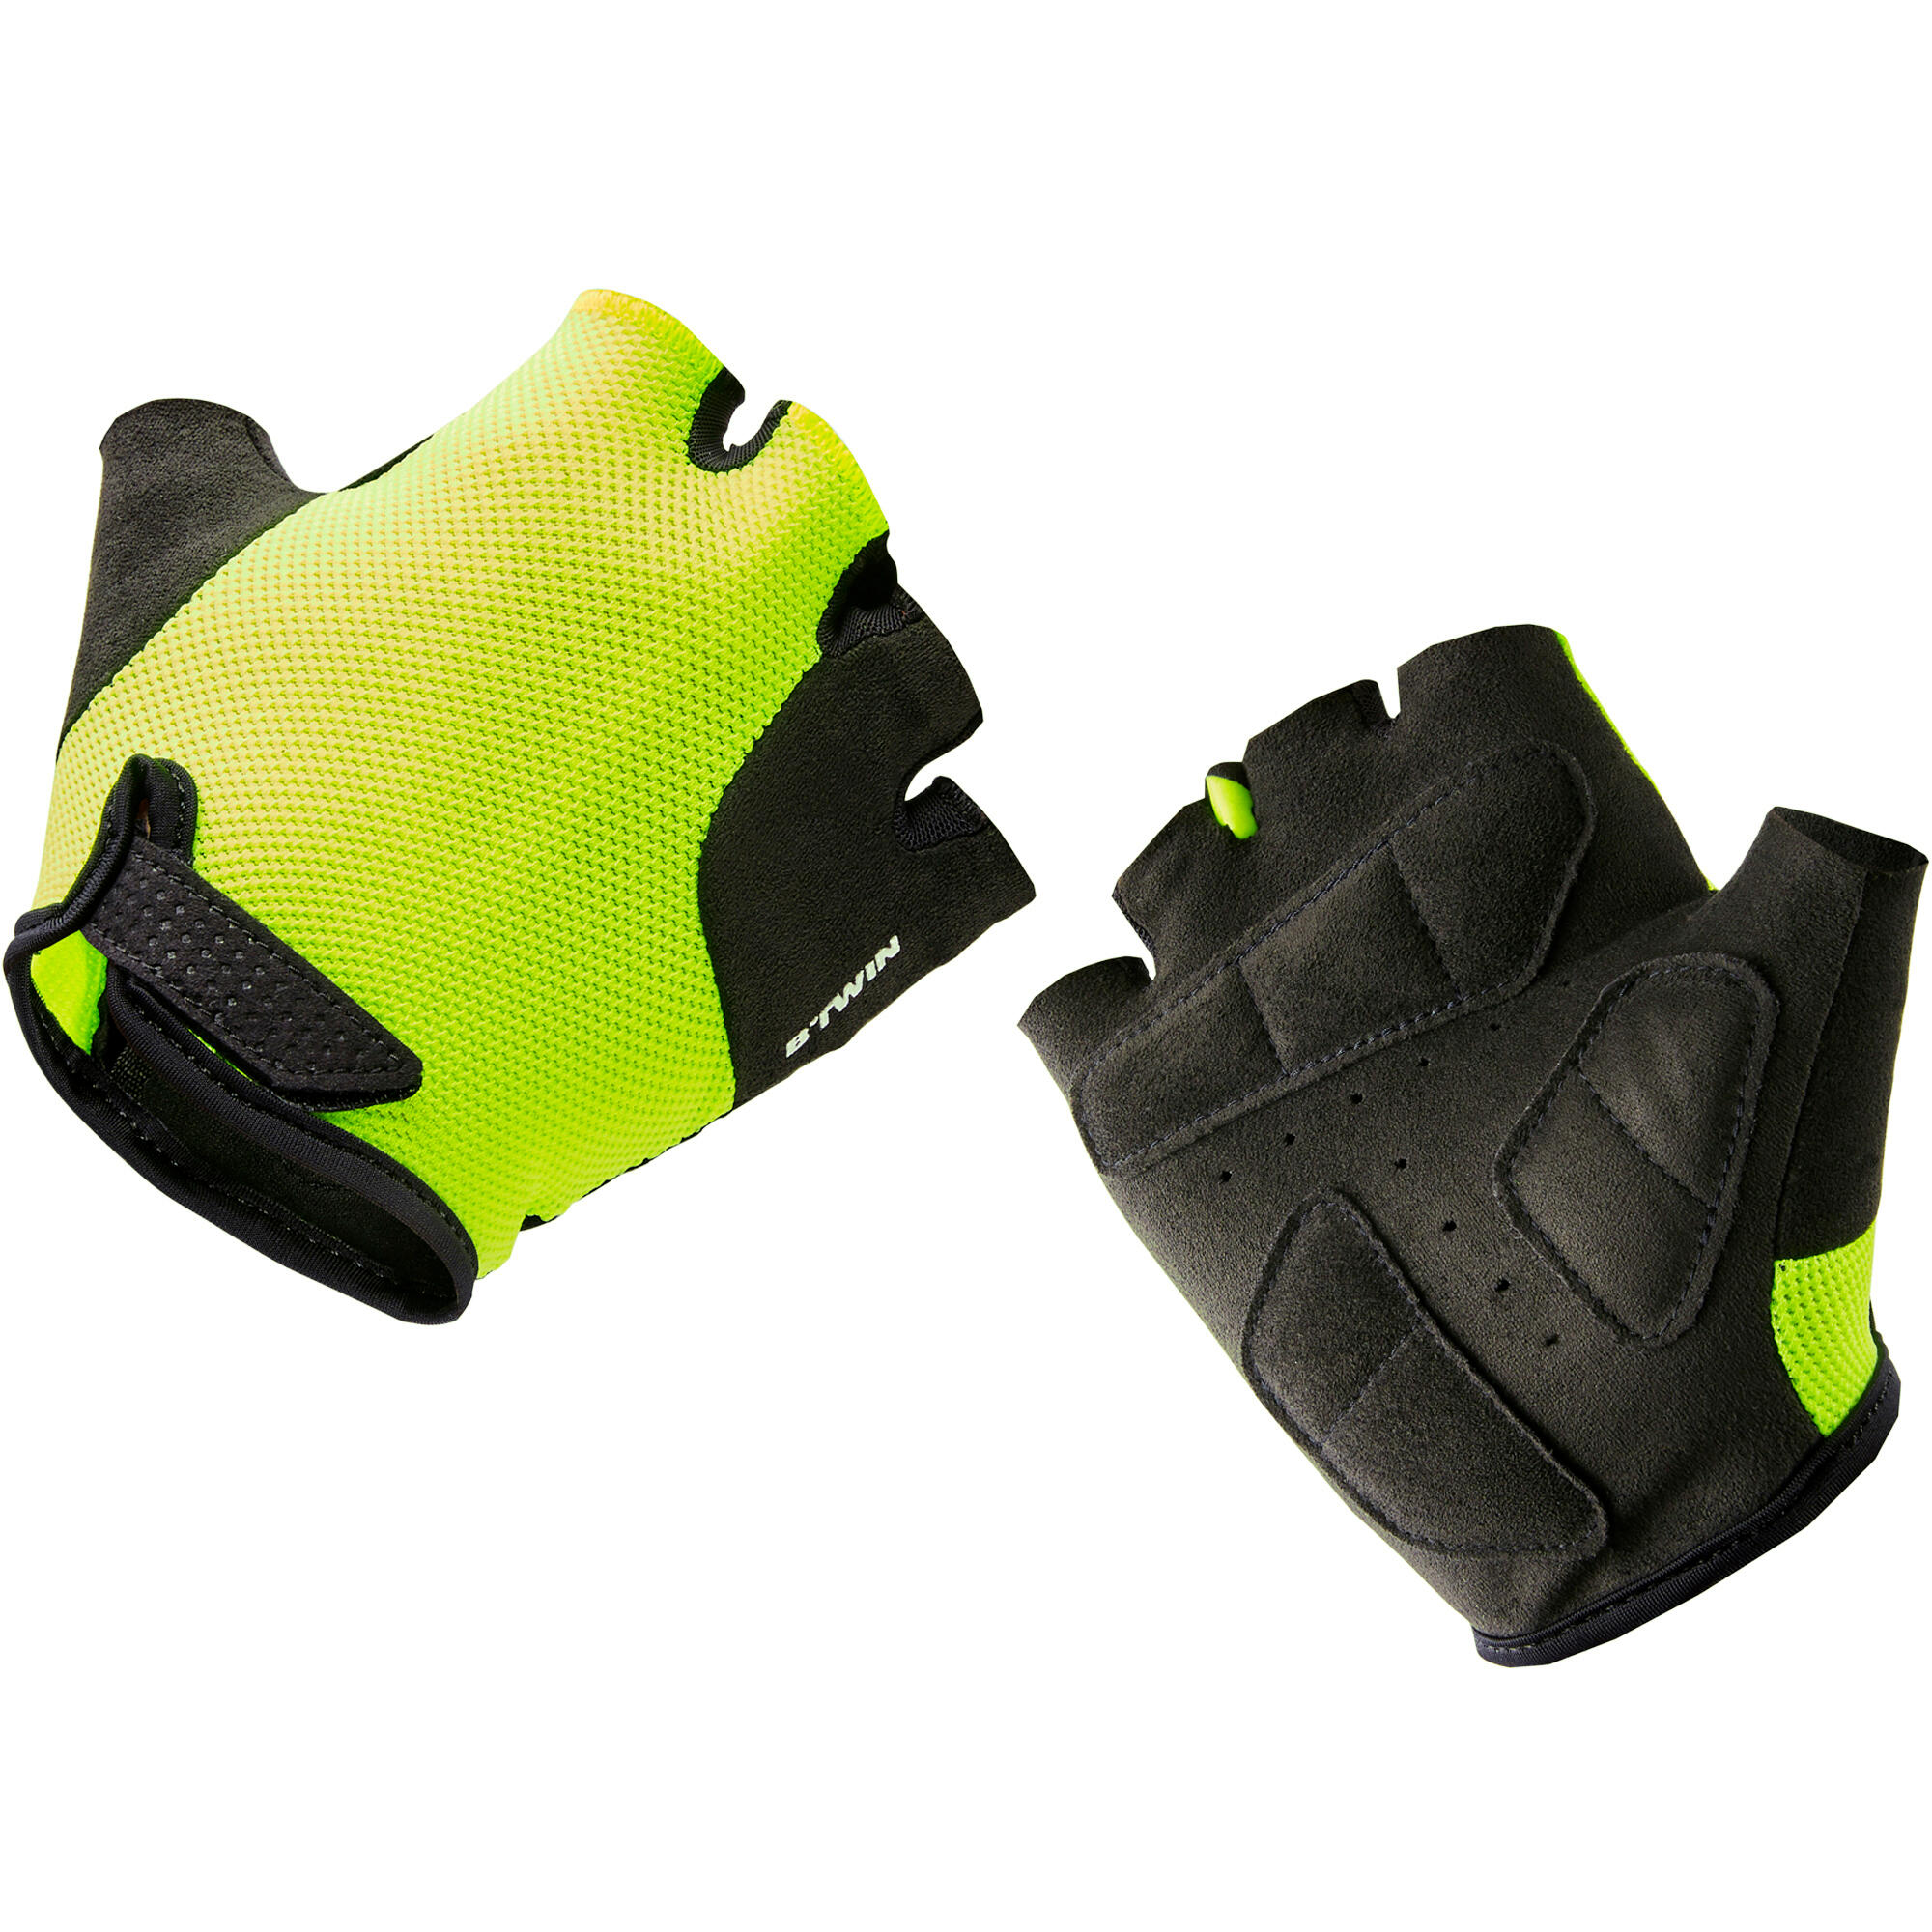 BTWIN 500 Kids' Fingerless Cycling Gloves - Yellow